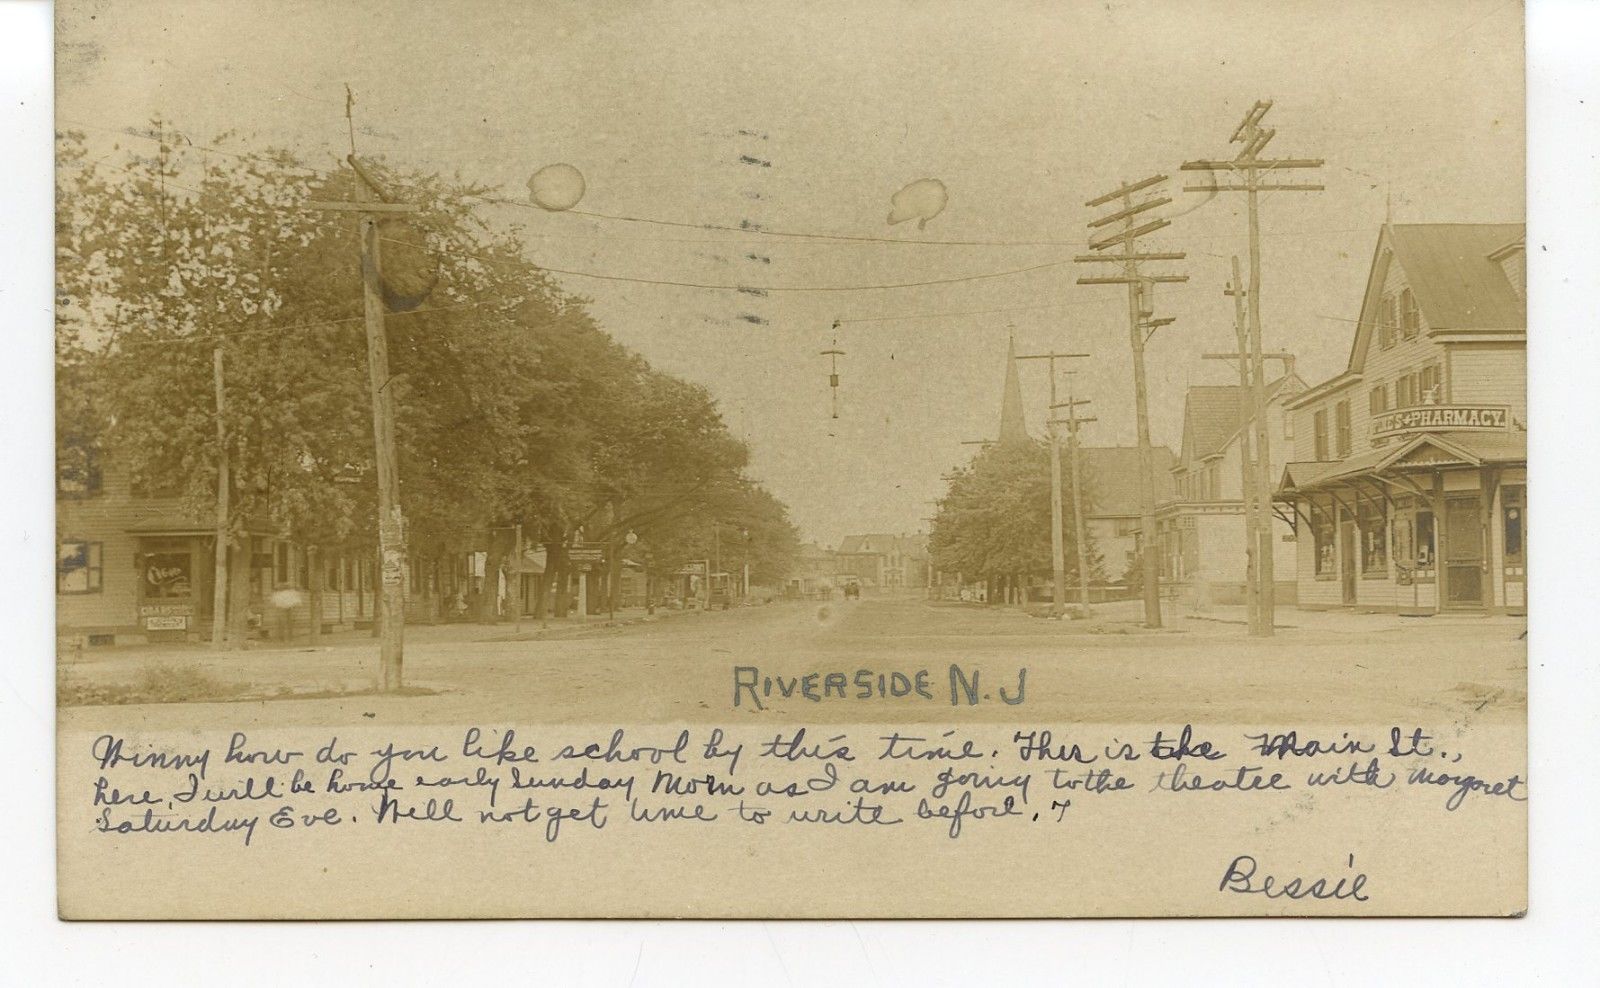 Riverside - Main Street and Pharmacy - c 1910